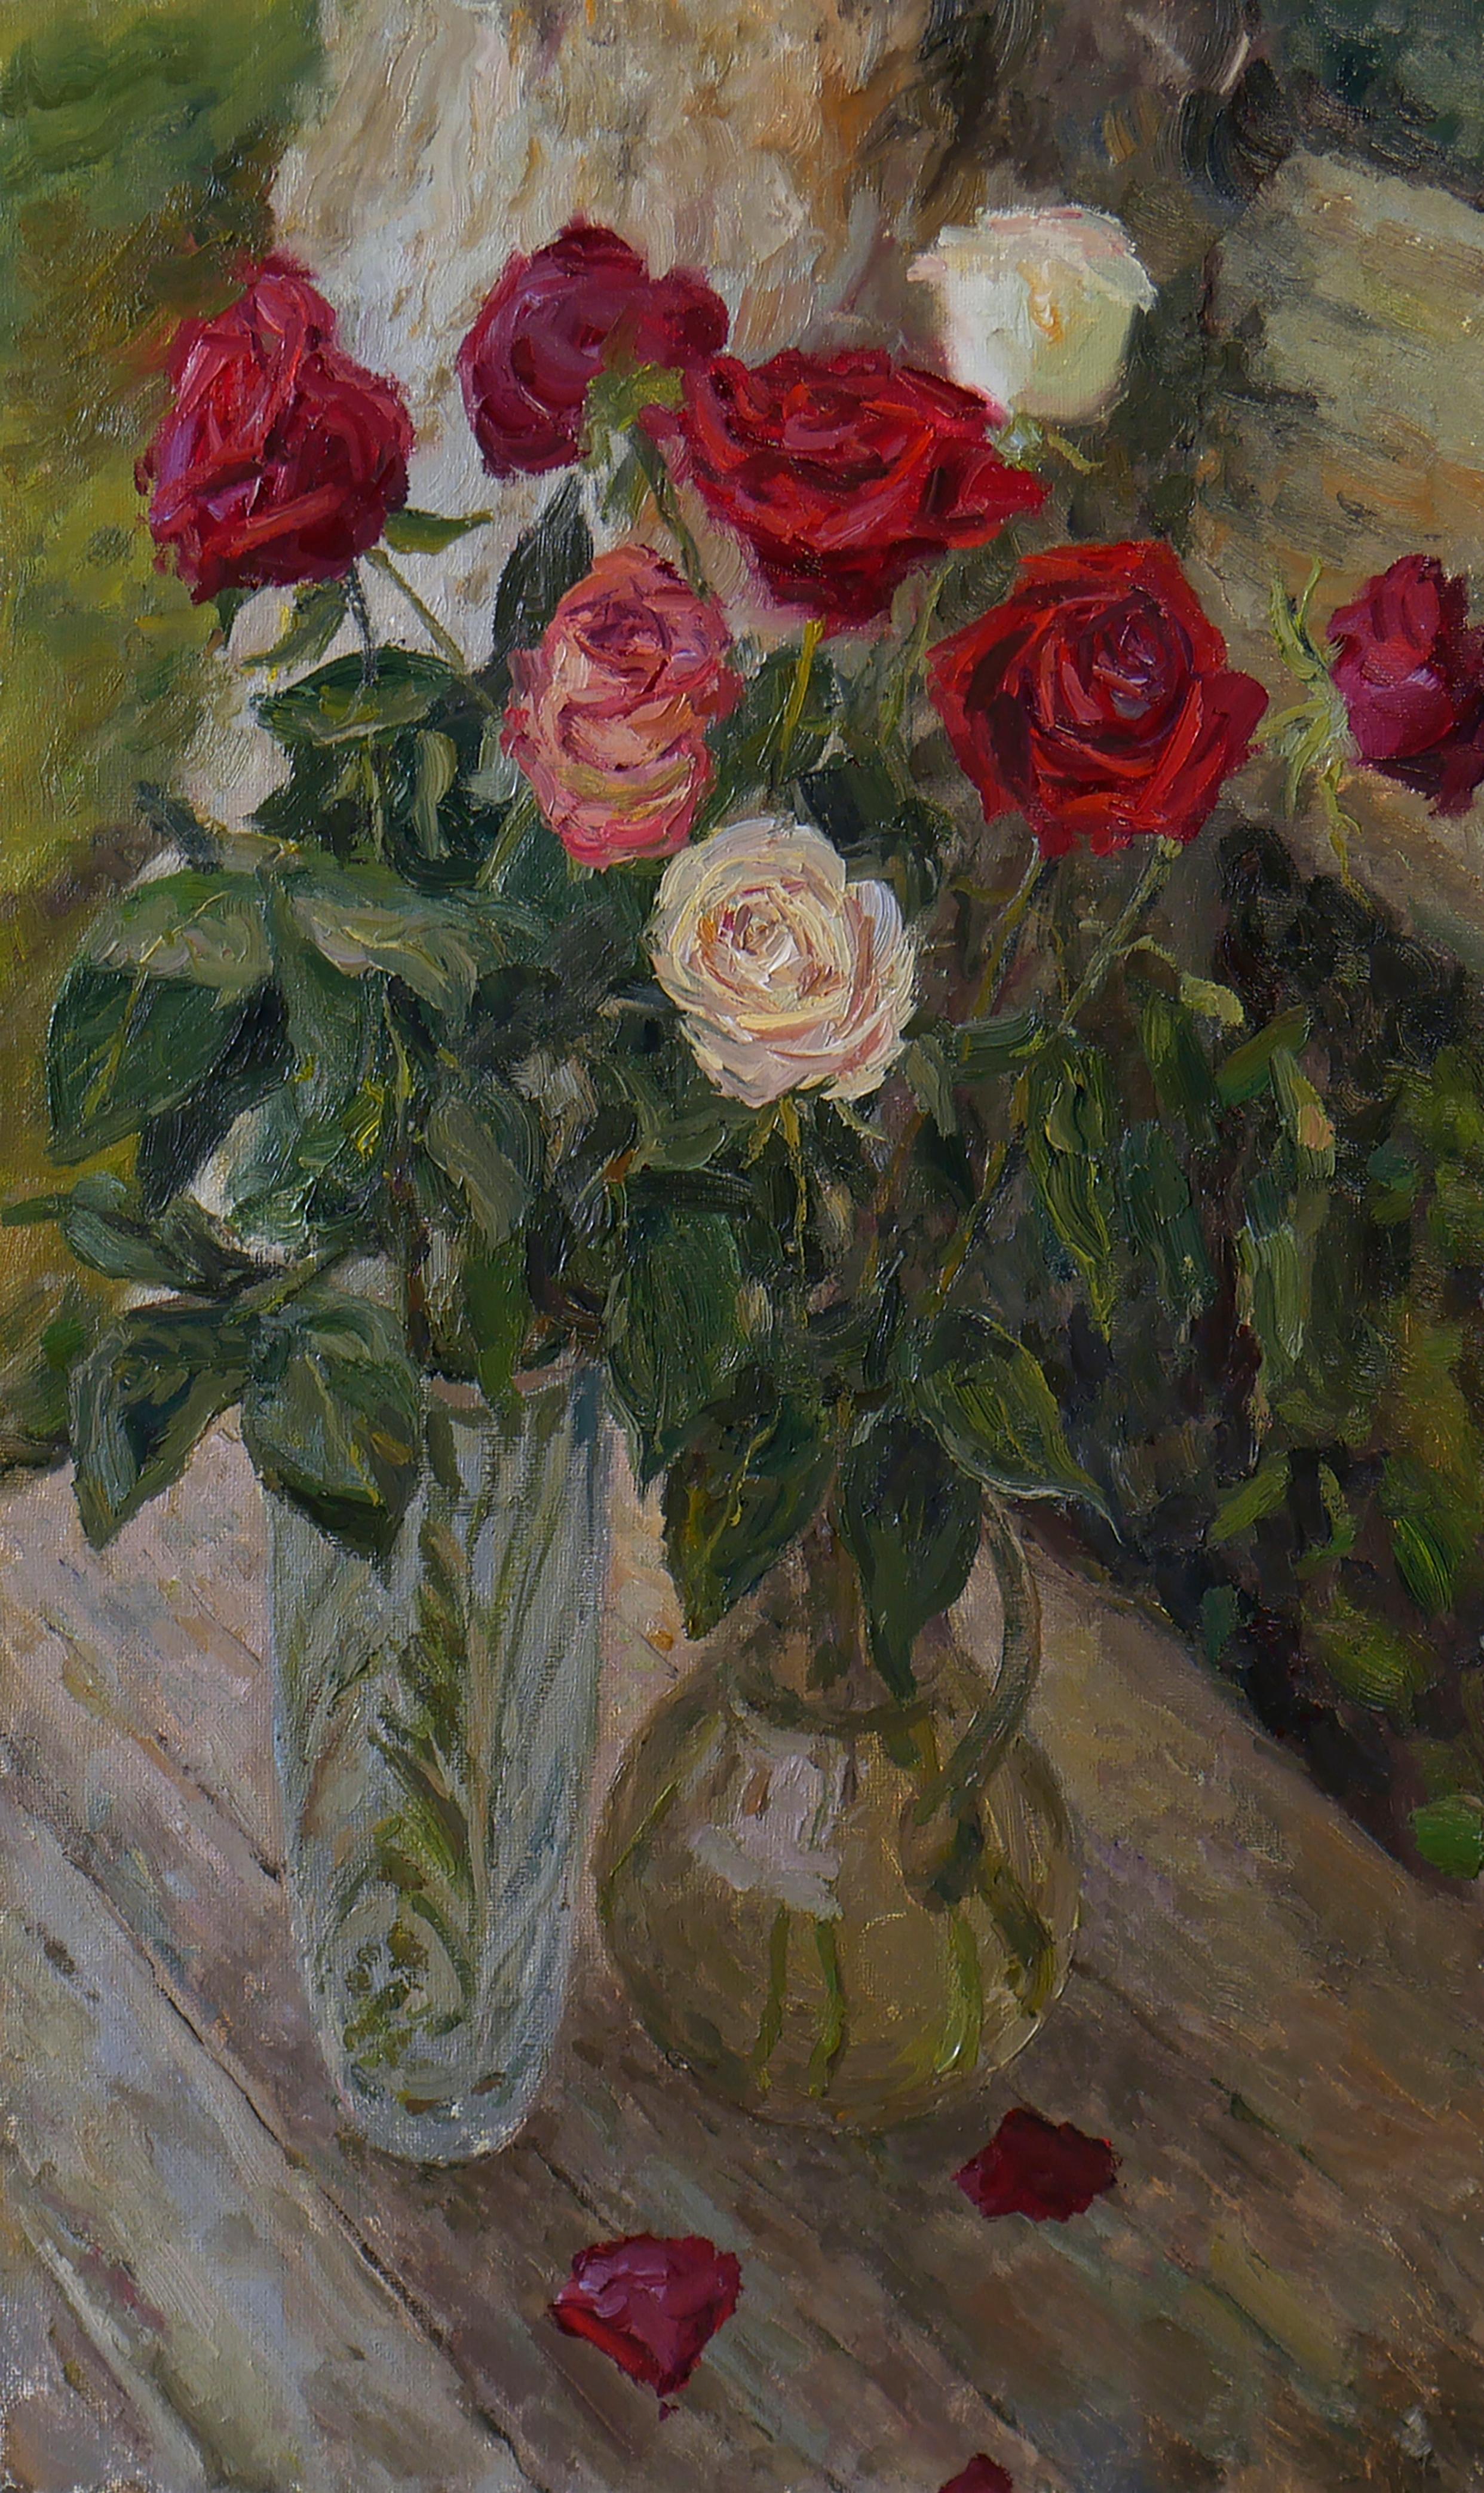 Nikolay Dmitriev Interior Painting - Roses In Vases - still life painting